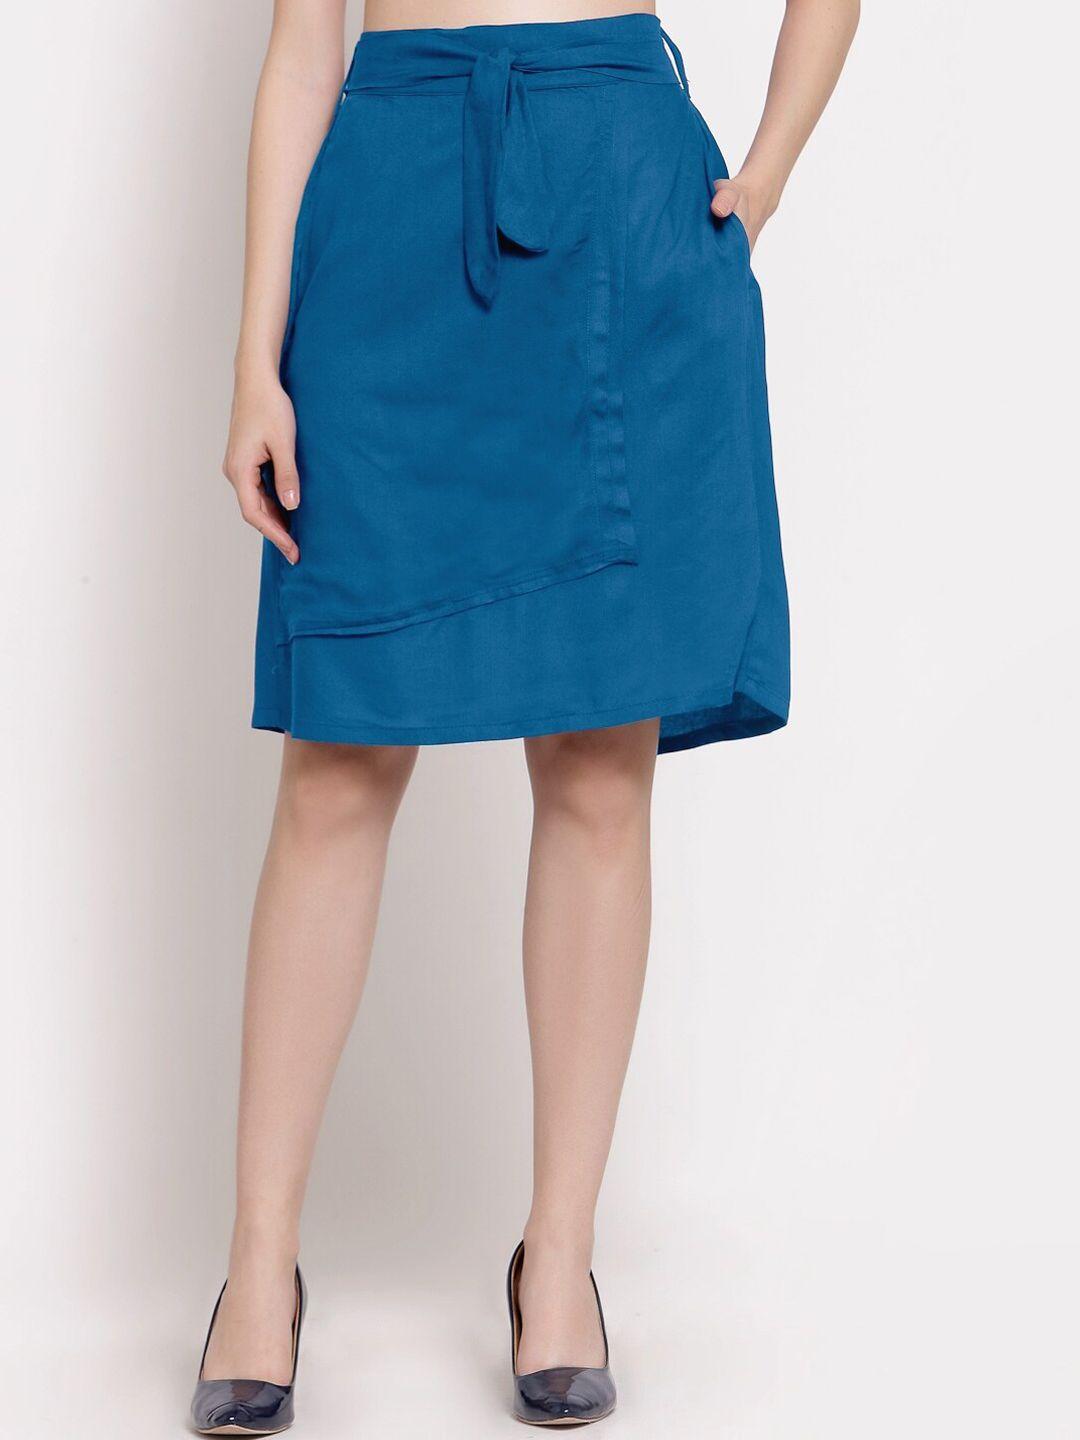 patrorna women blue solid knee-length skirts